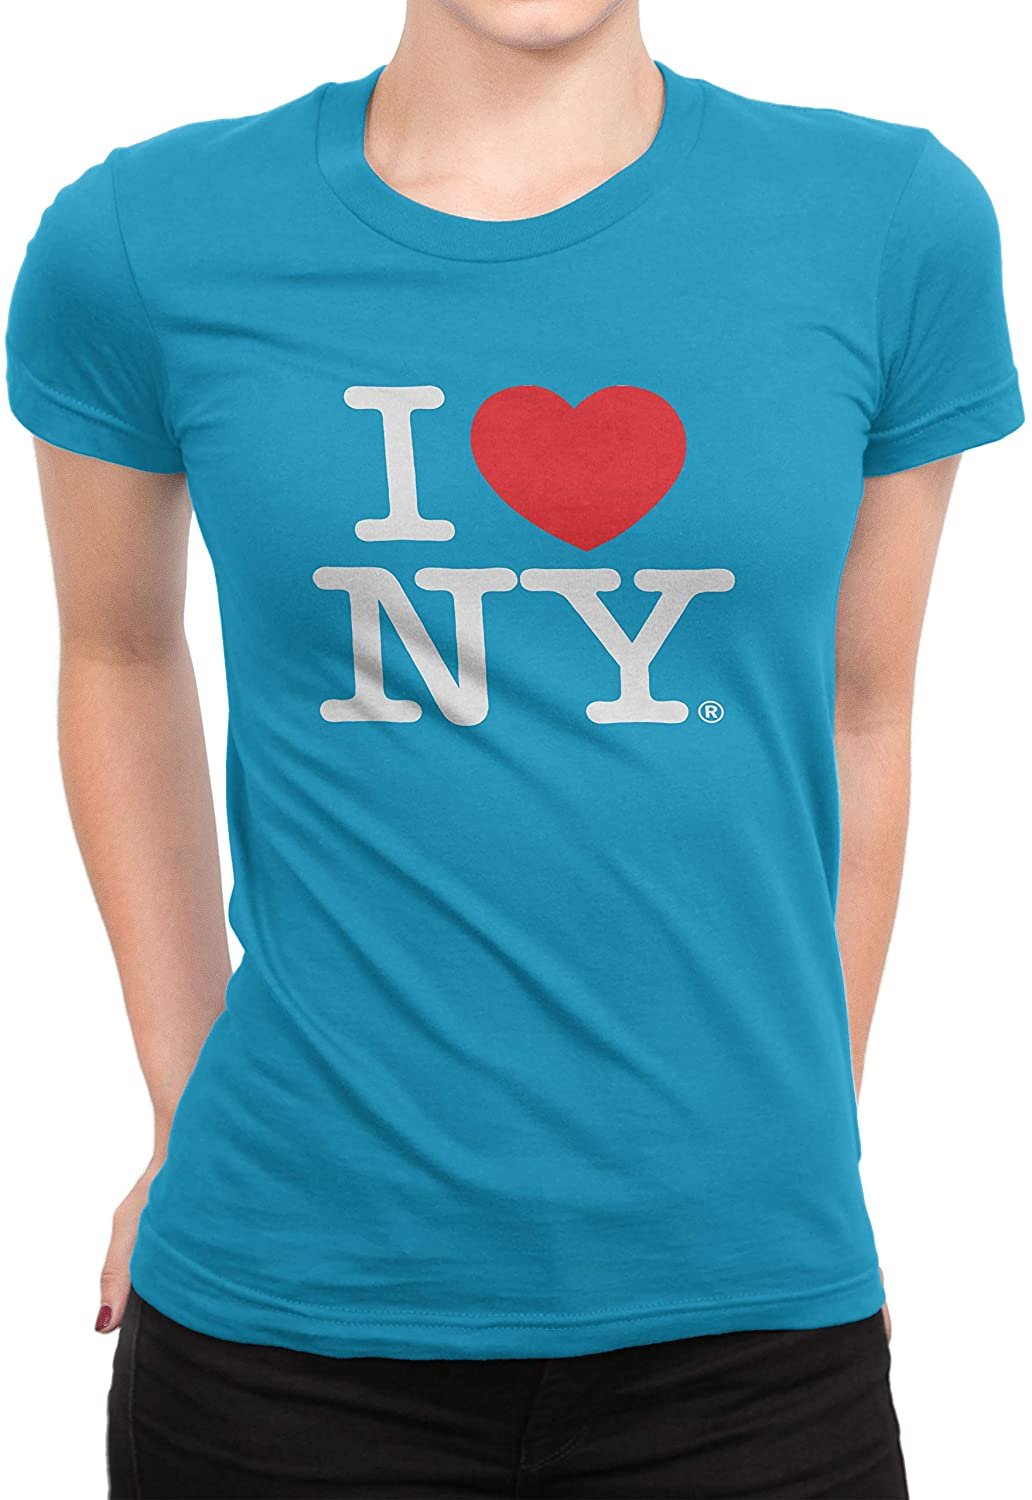 I Love NY Ladies T-Shirt Crewneck Tee Officially Licensed | eBay